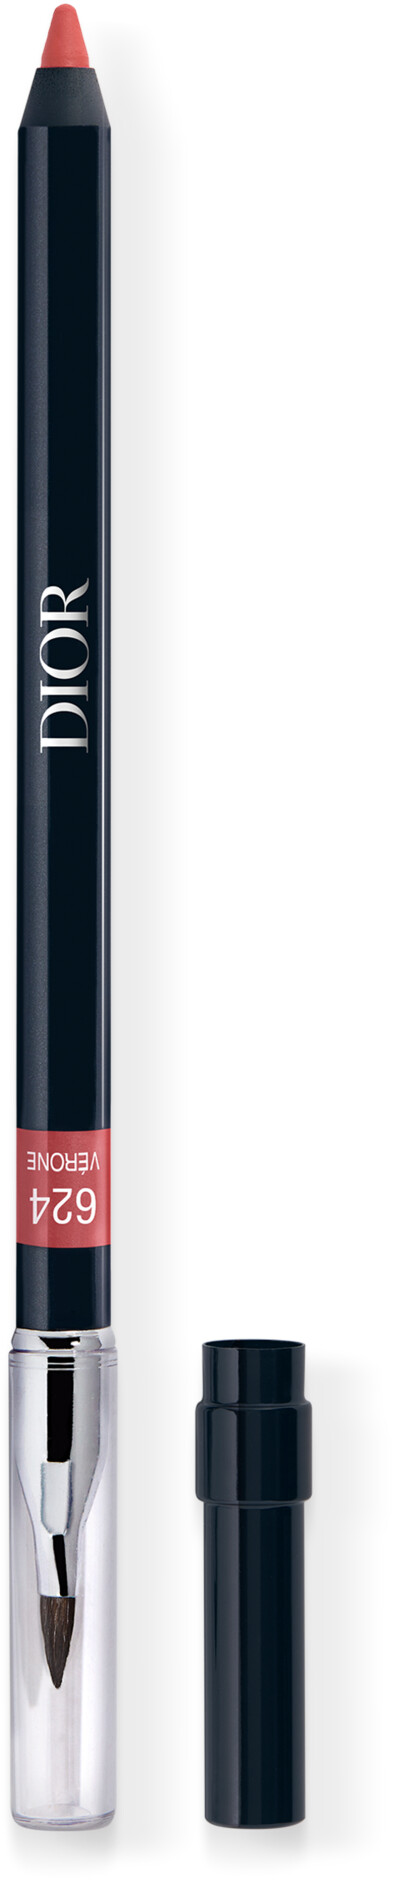 DIOR Rouge Dior Contour Lip Liner Pencil 1.2g 720 - Icone